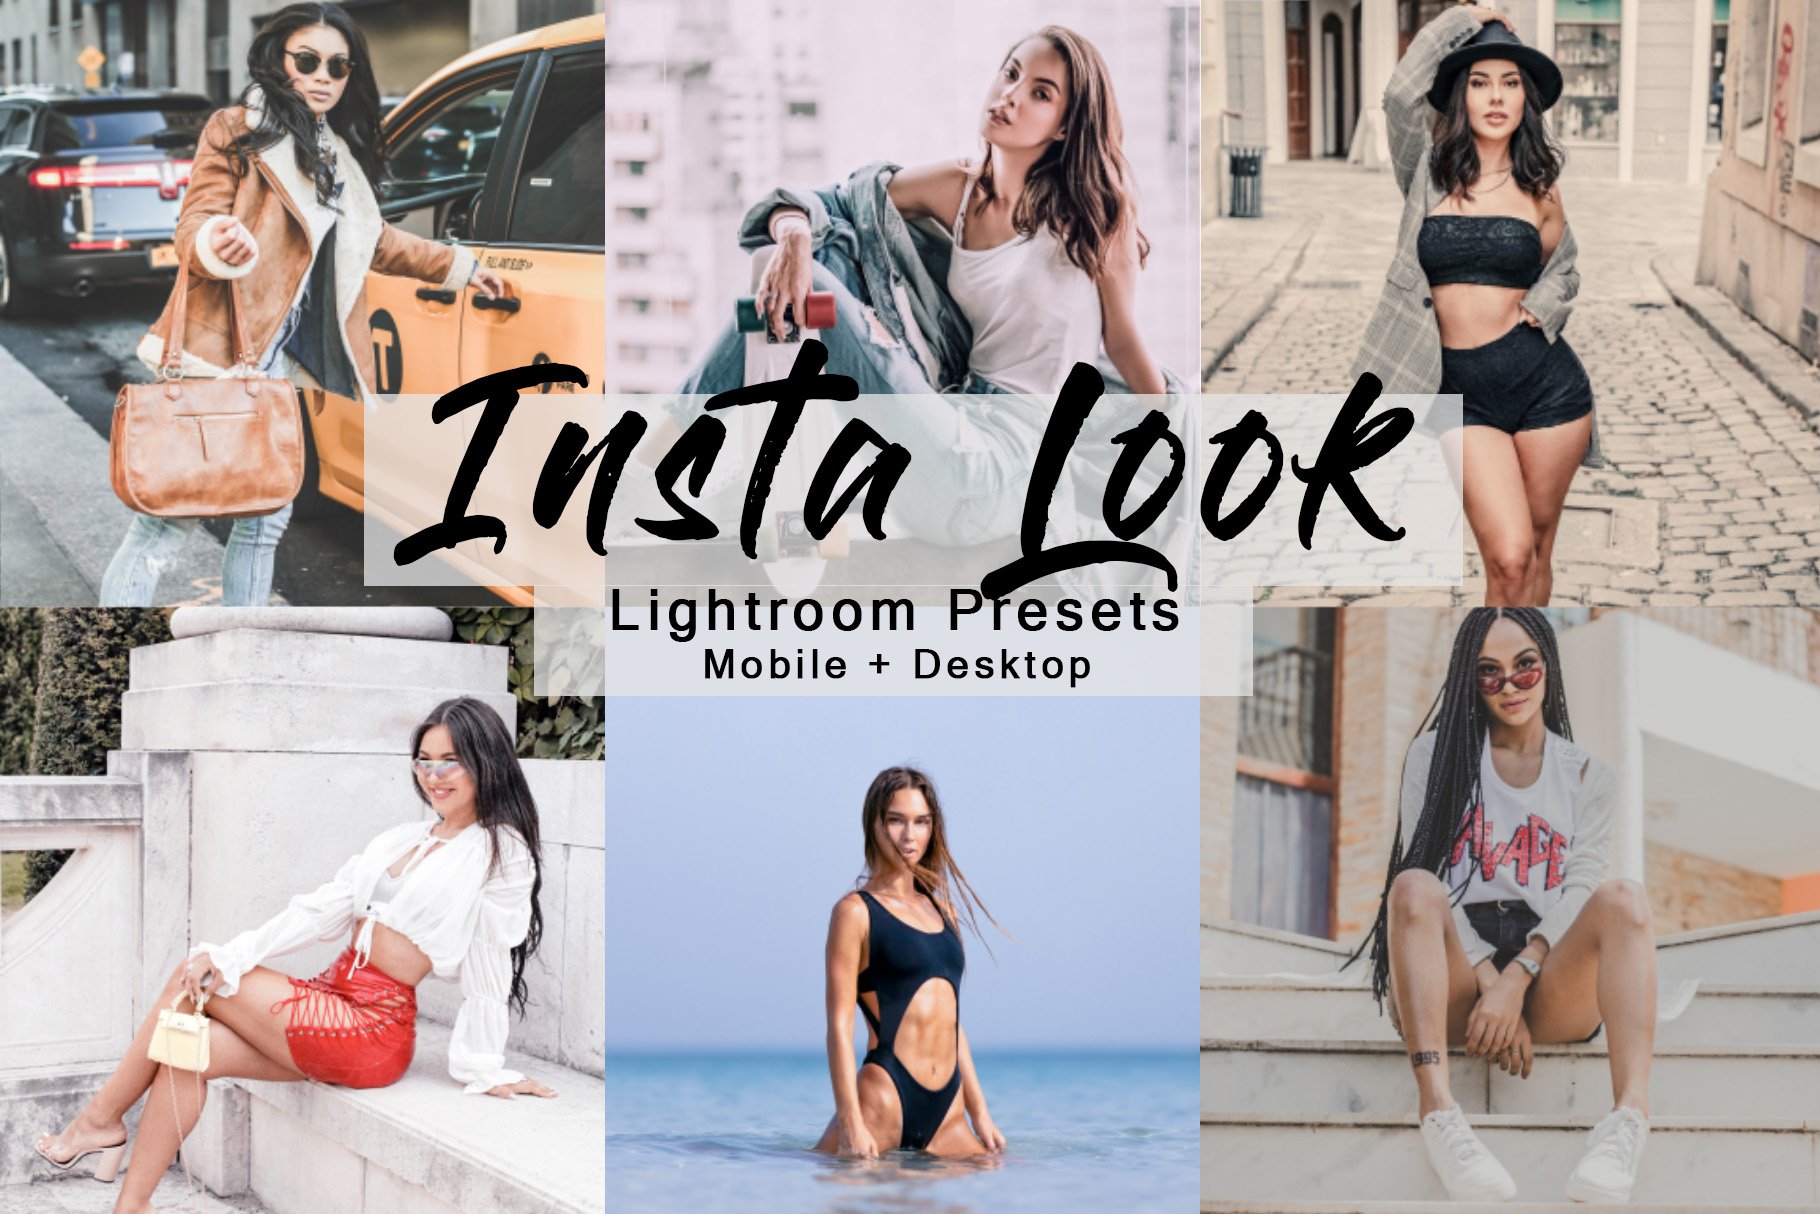 Insta Looks | Lightroom Presetscover image.